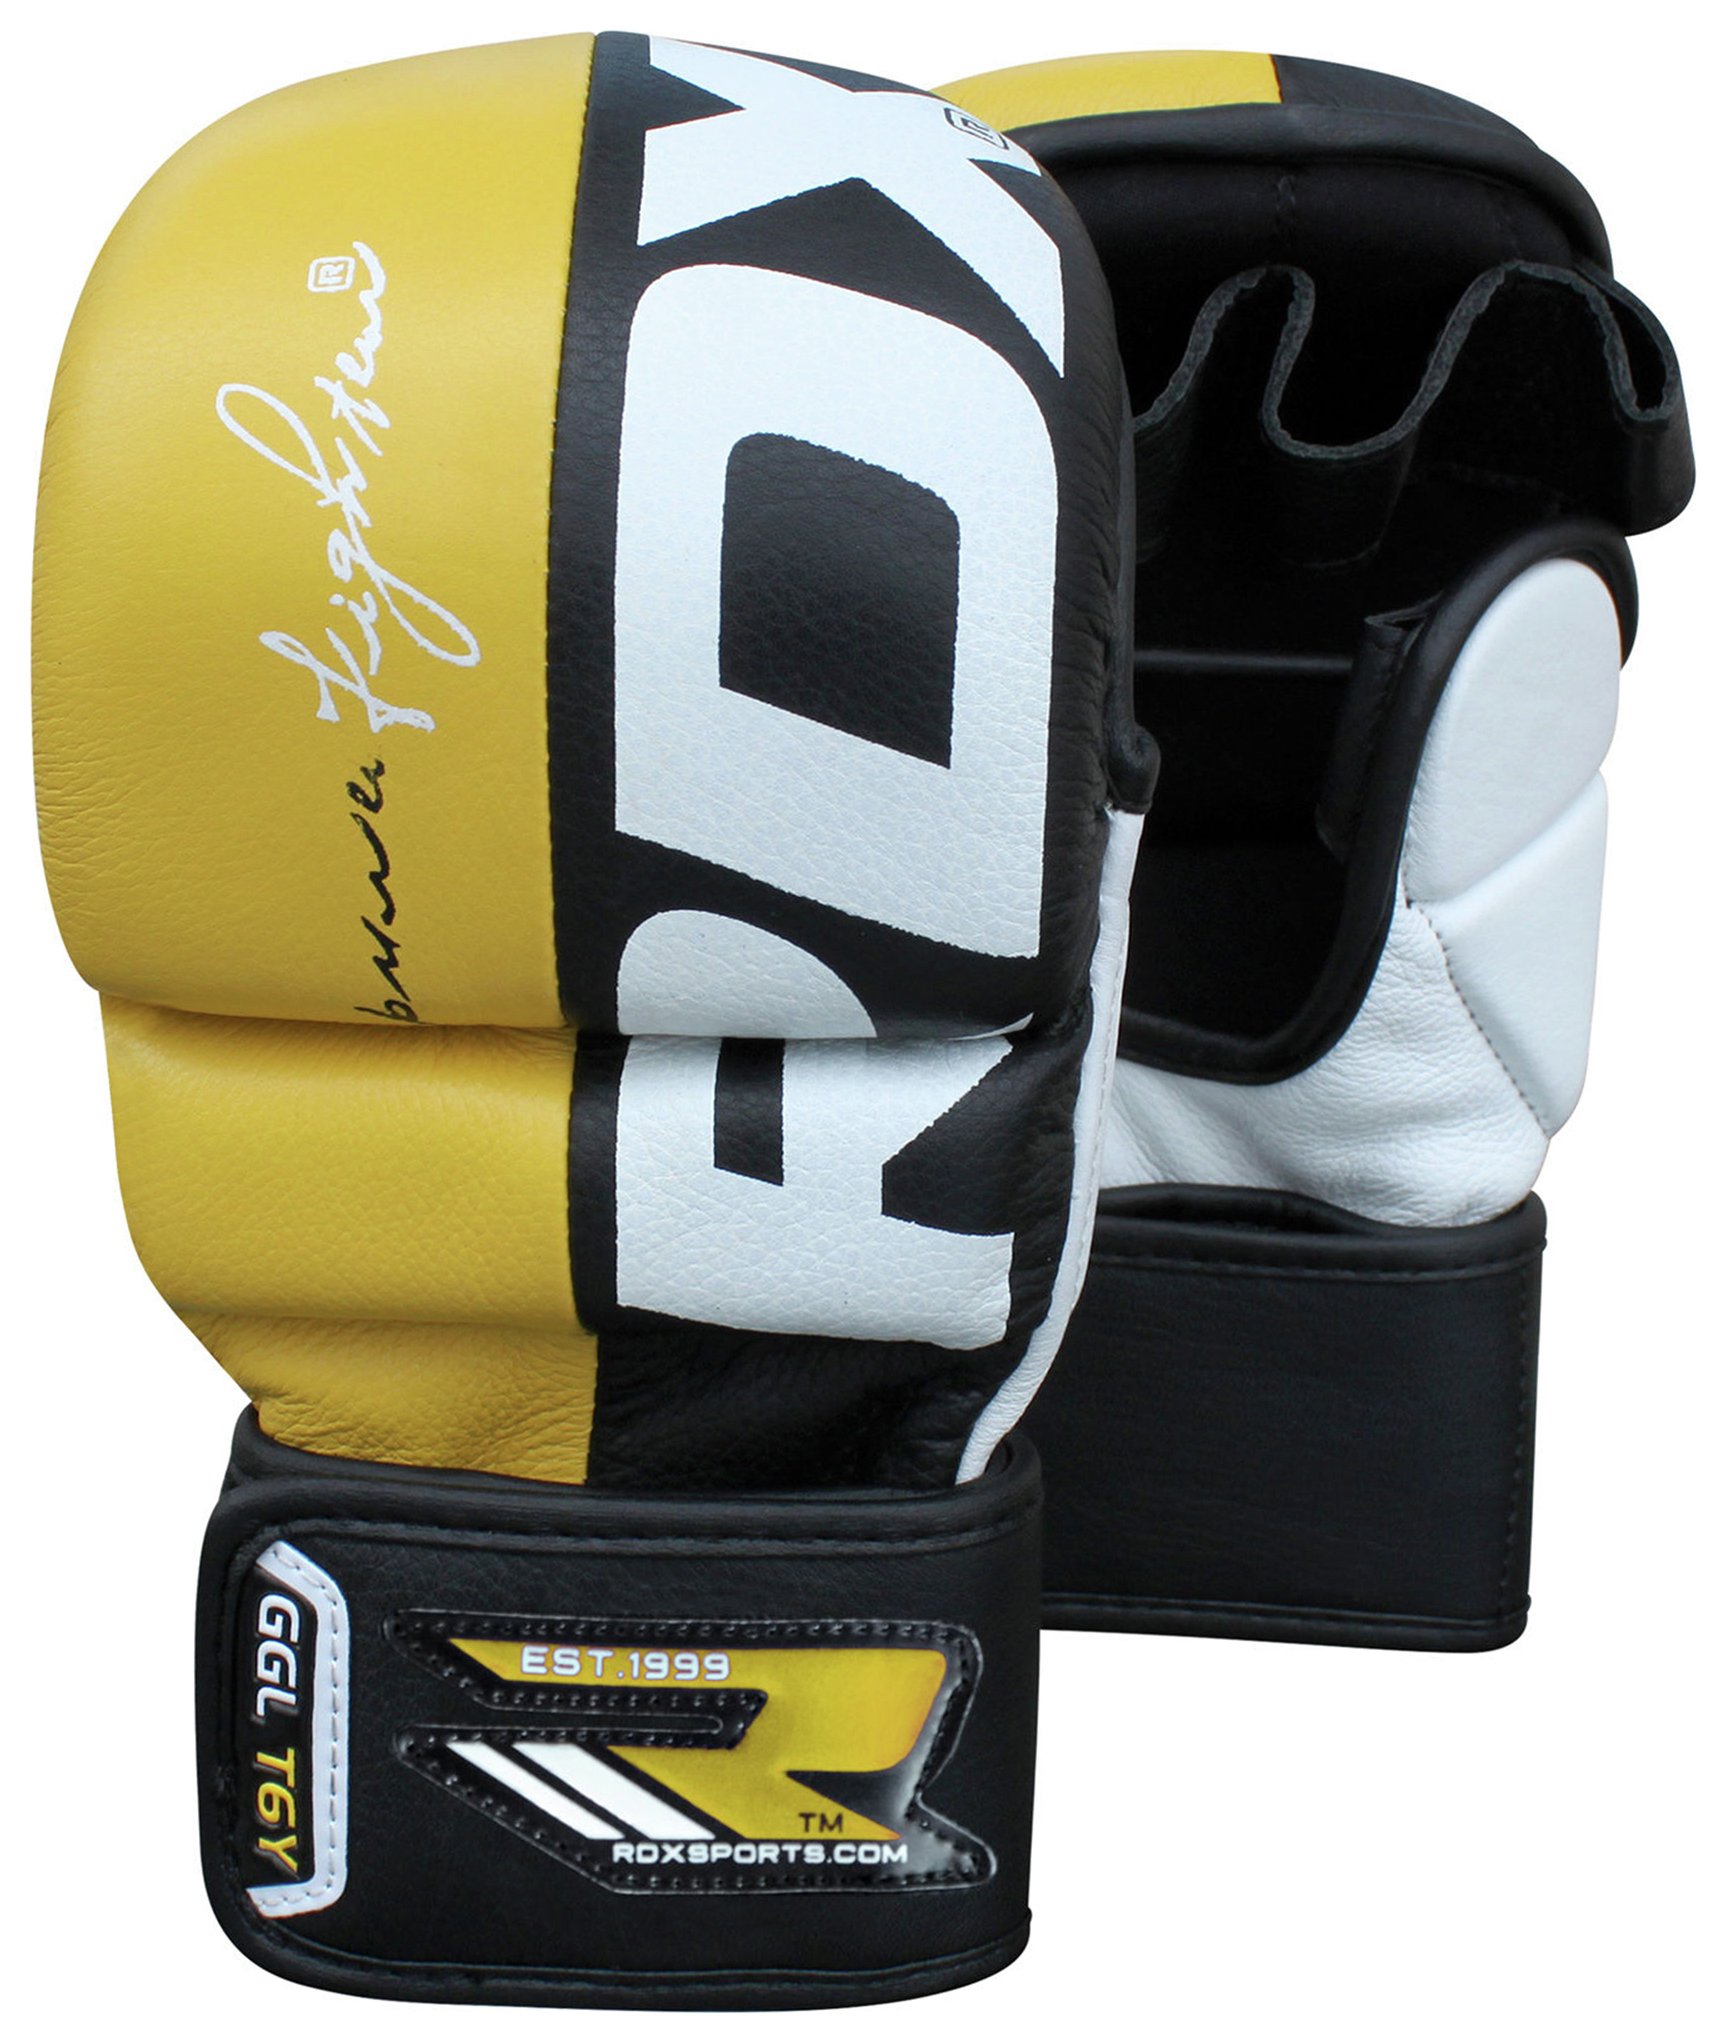 RDX - Medium to Large Mixed Martial Arts Gloves